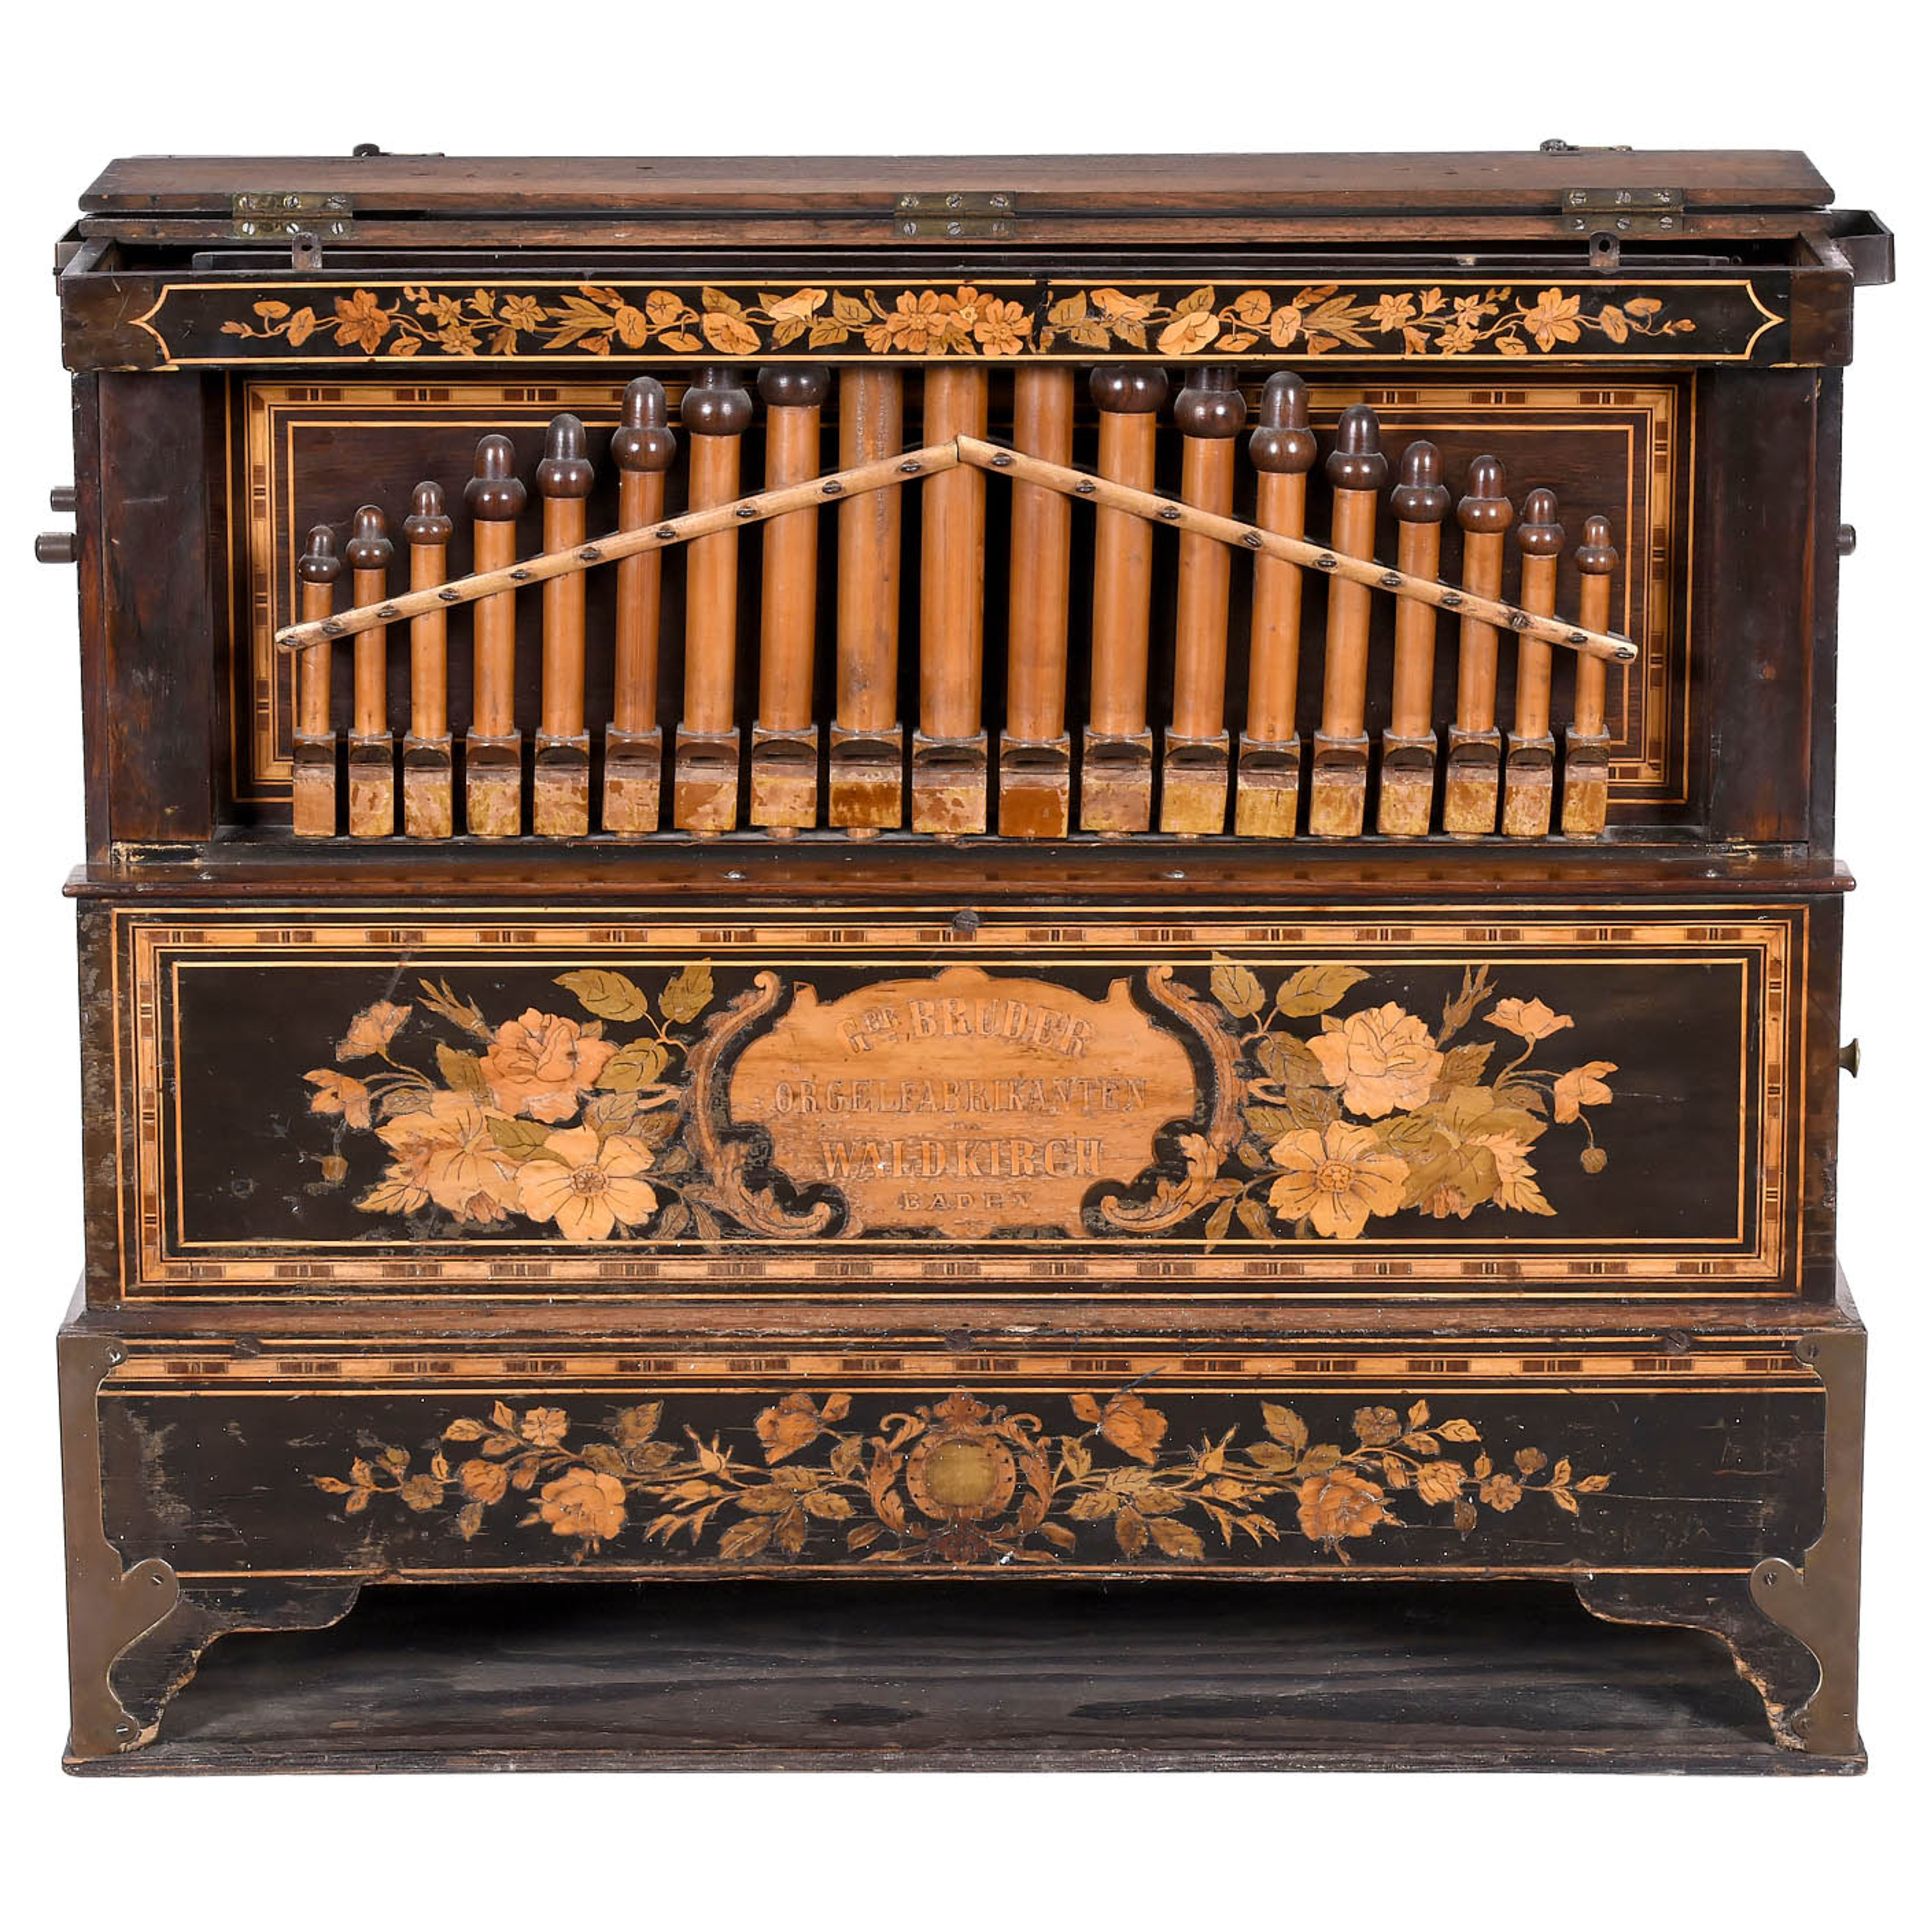 Early Street Barrel Organ by Bruder, c. 1890 - Bild 2 aus 5